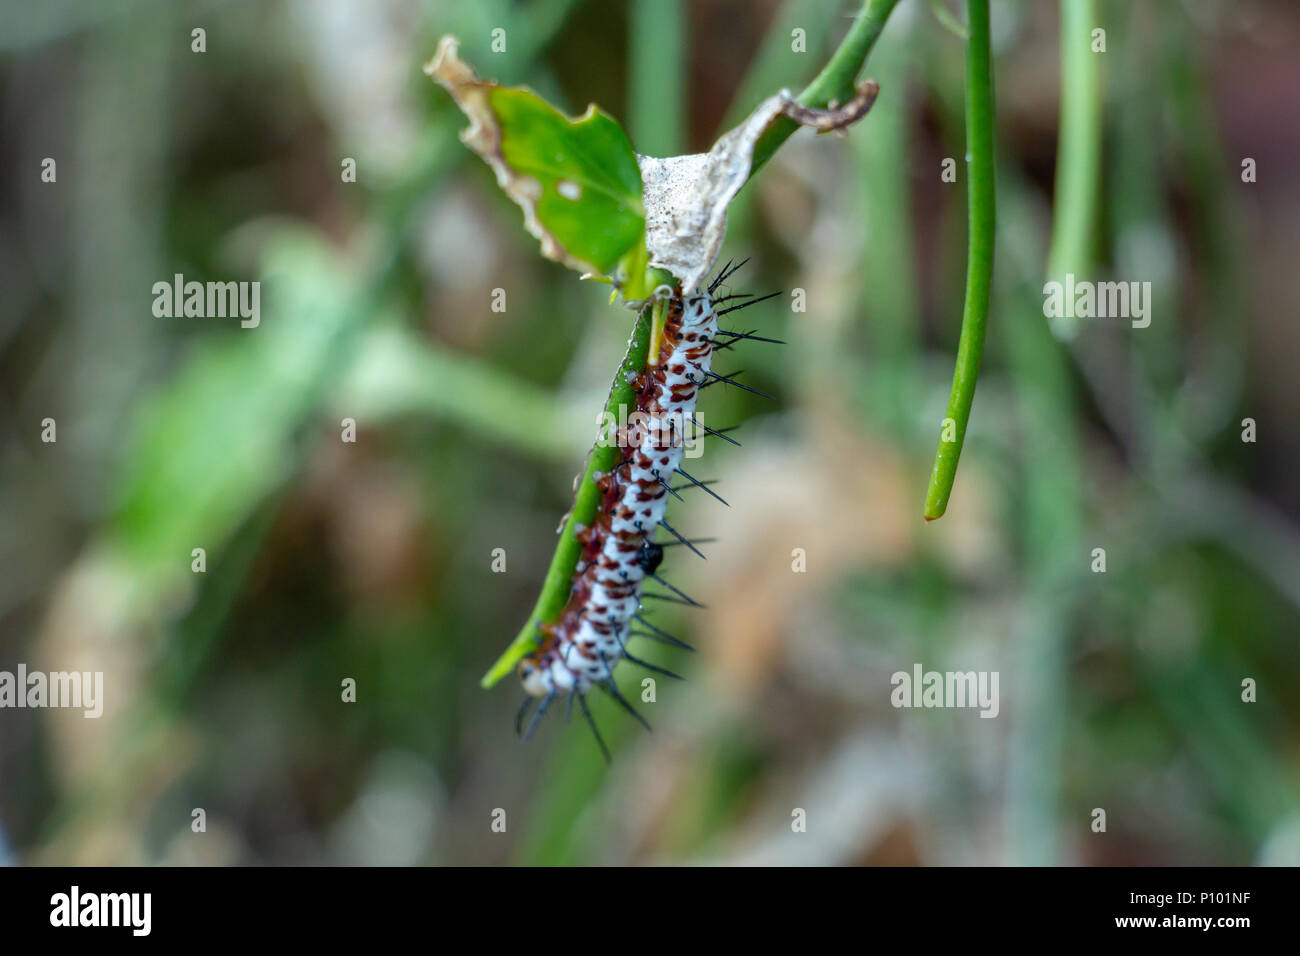 Zebra longwing caterpillar (Heliconius charithonia) on stem - Davie, Florida, USA Stock Photo